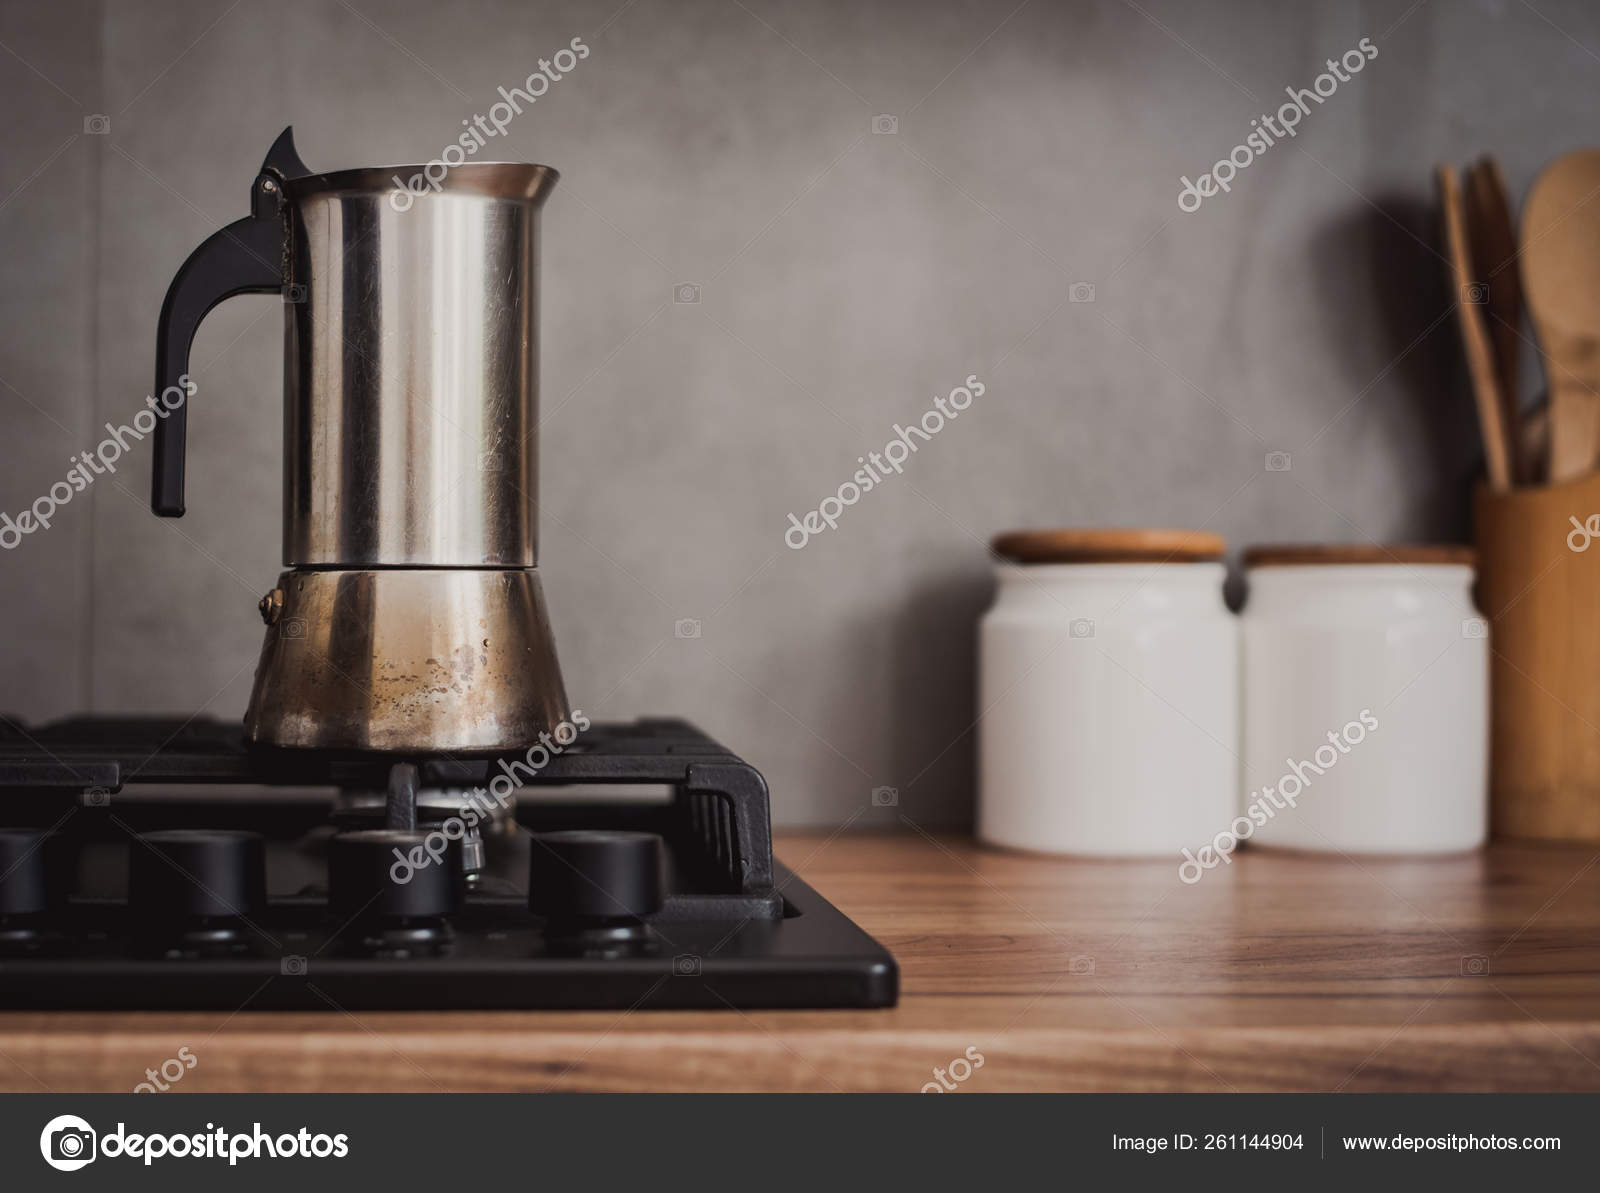 Classic Italian style moka coffee pot on the gas stove with fire